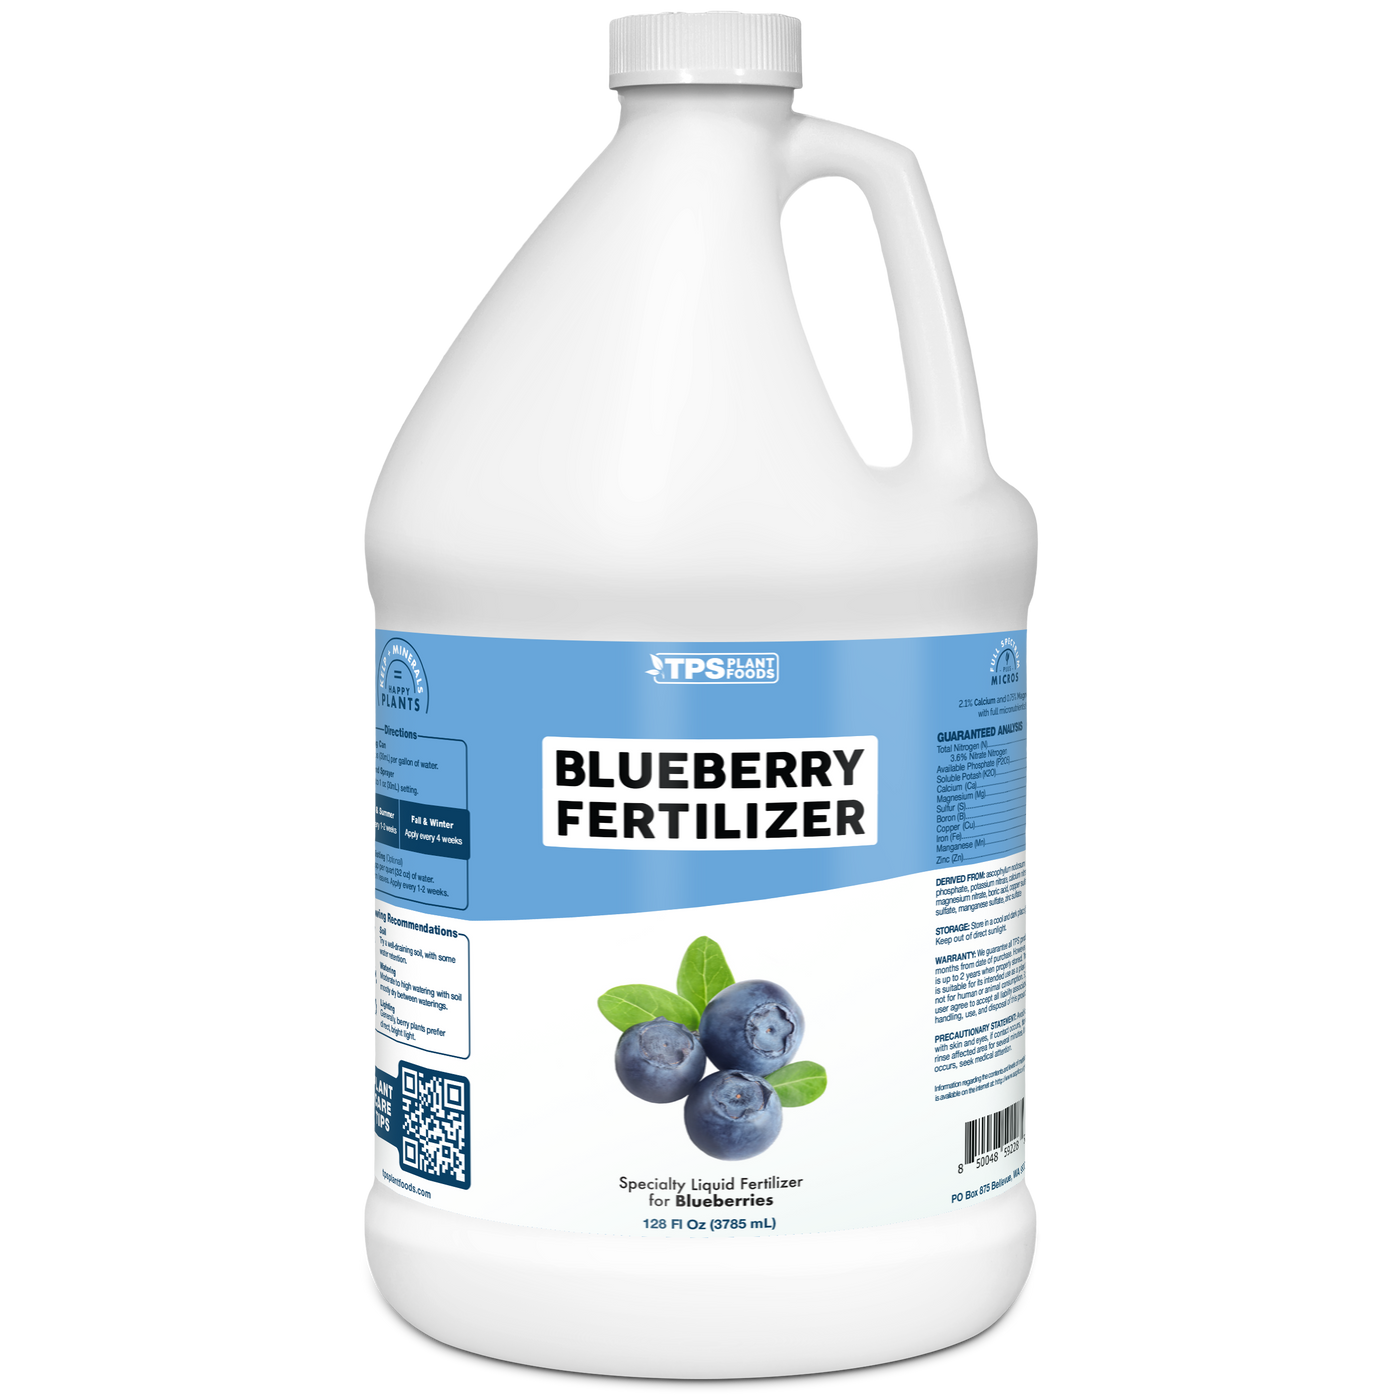 Blueberry Fertilizer